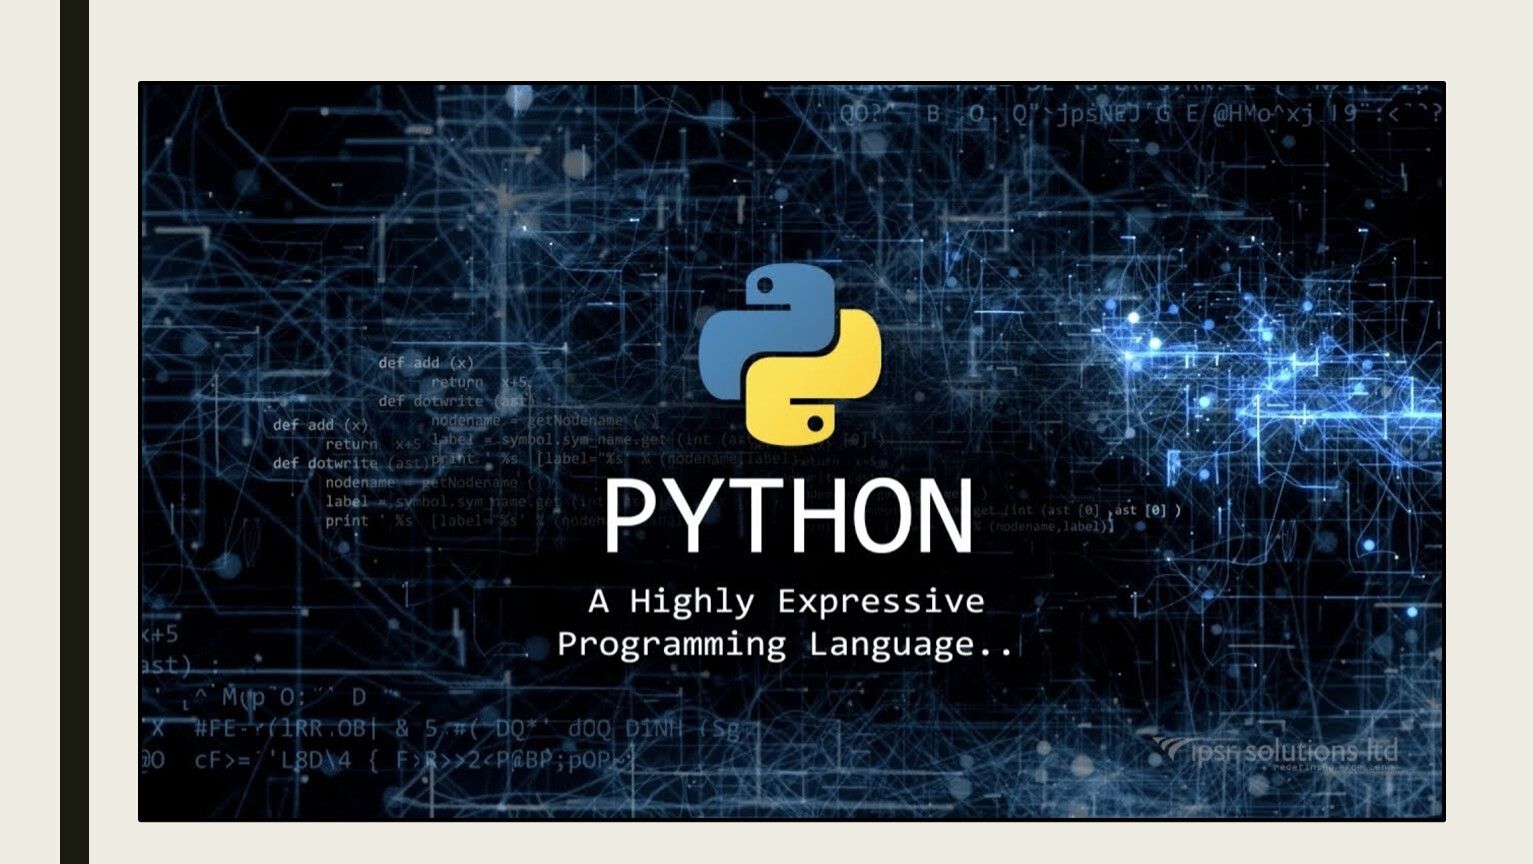 Https python 3. Питон язык программирования. Язык програмирования пион. Язык програмирования Митон. Питонтязык программирования.